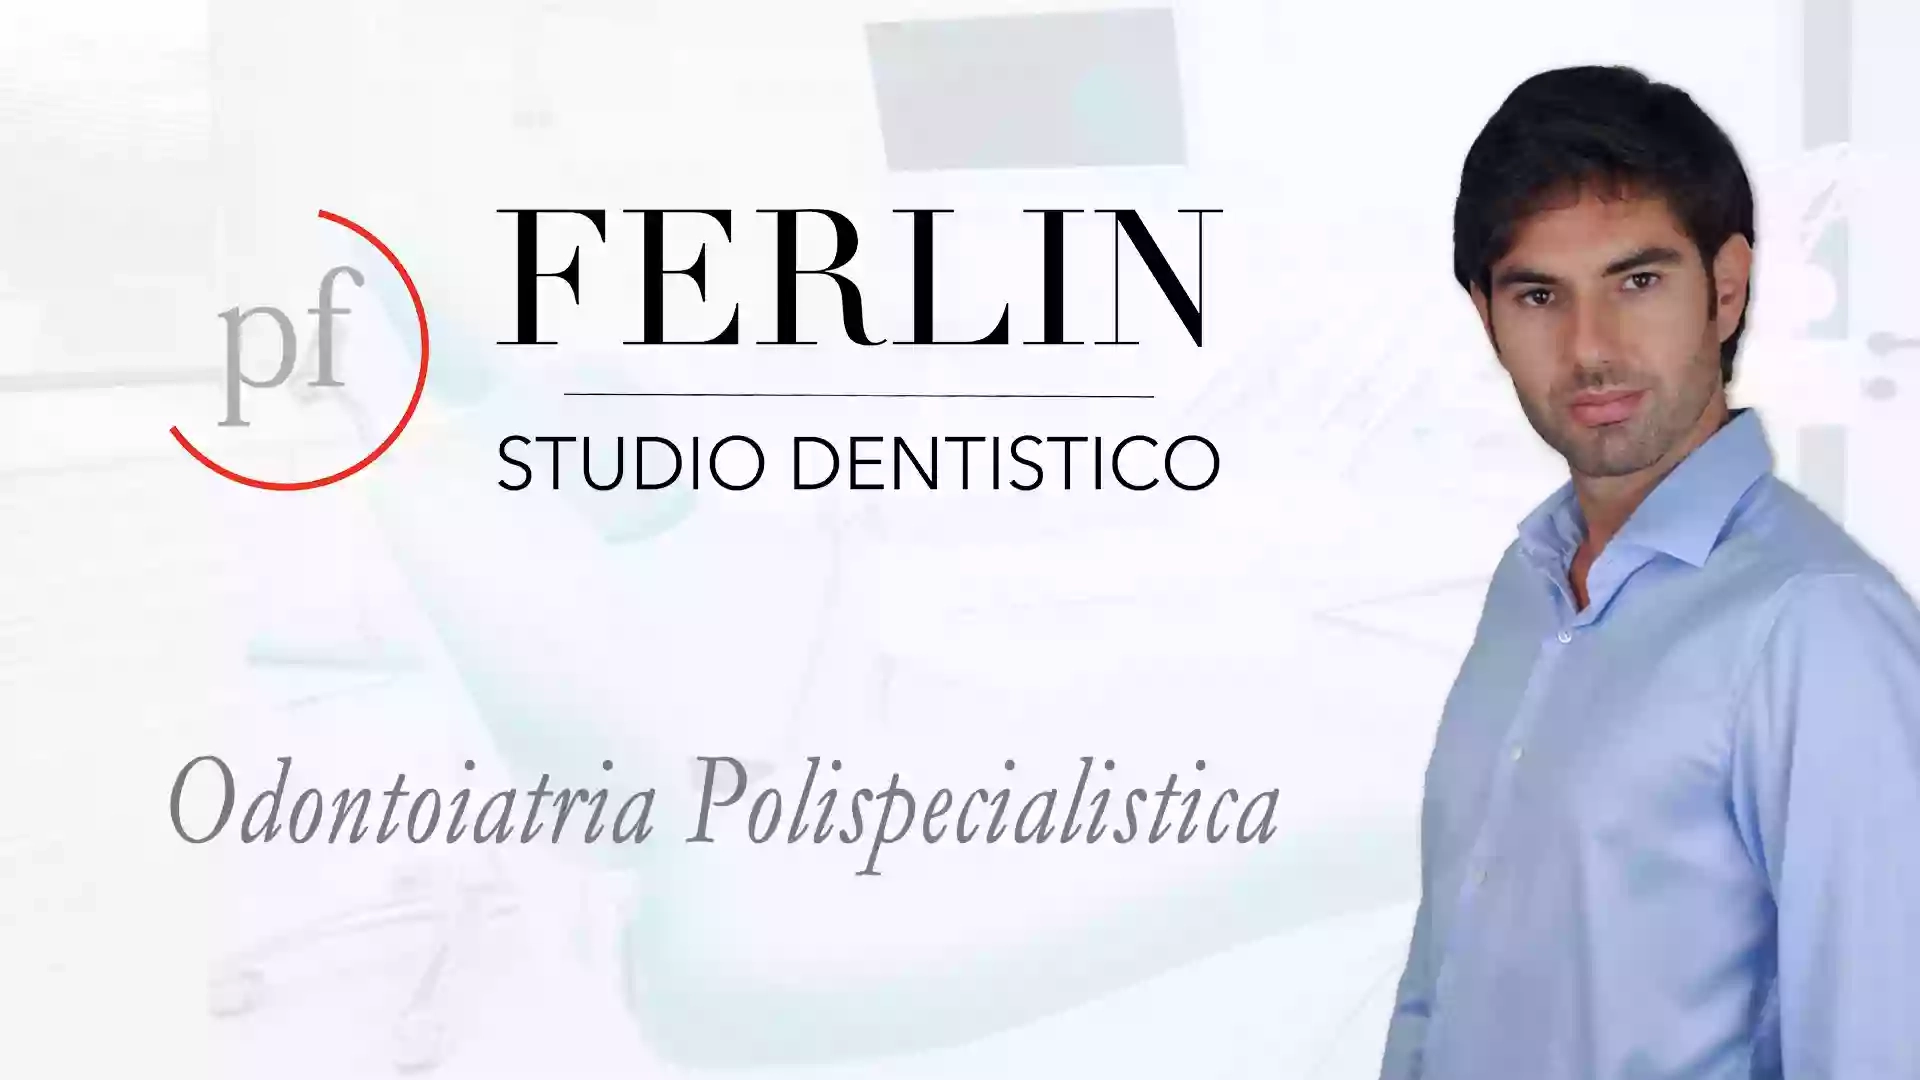 FERLIN - Studio Dentistico - Odontoiatria Polispecialistica